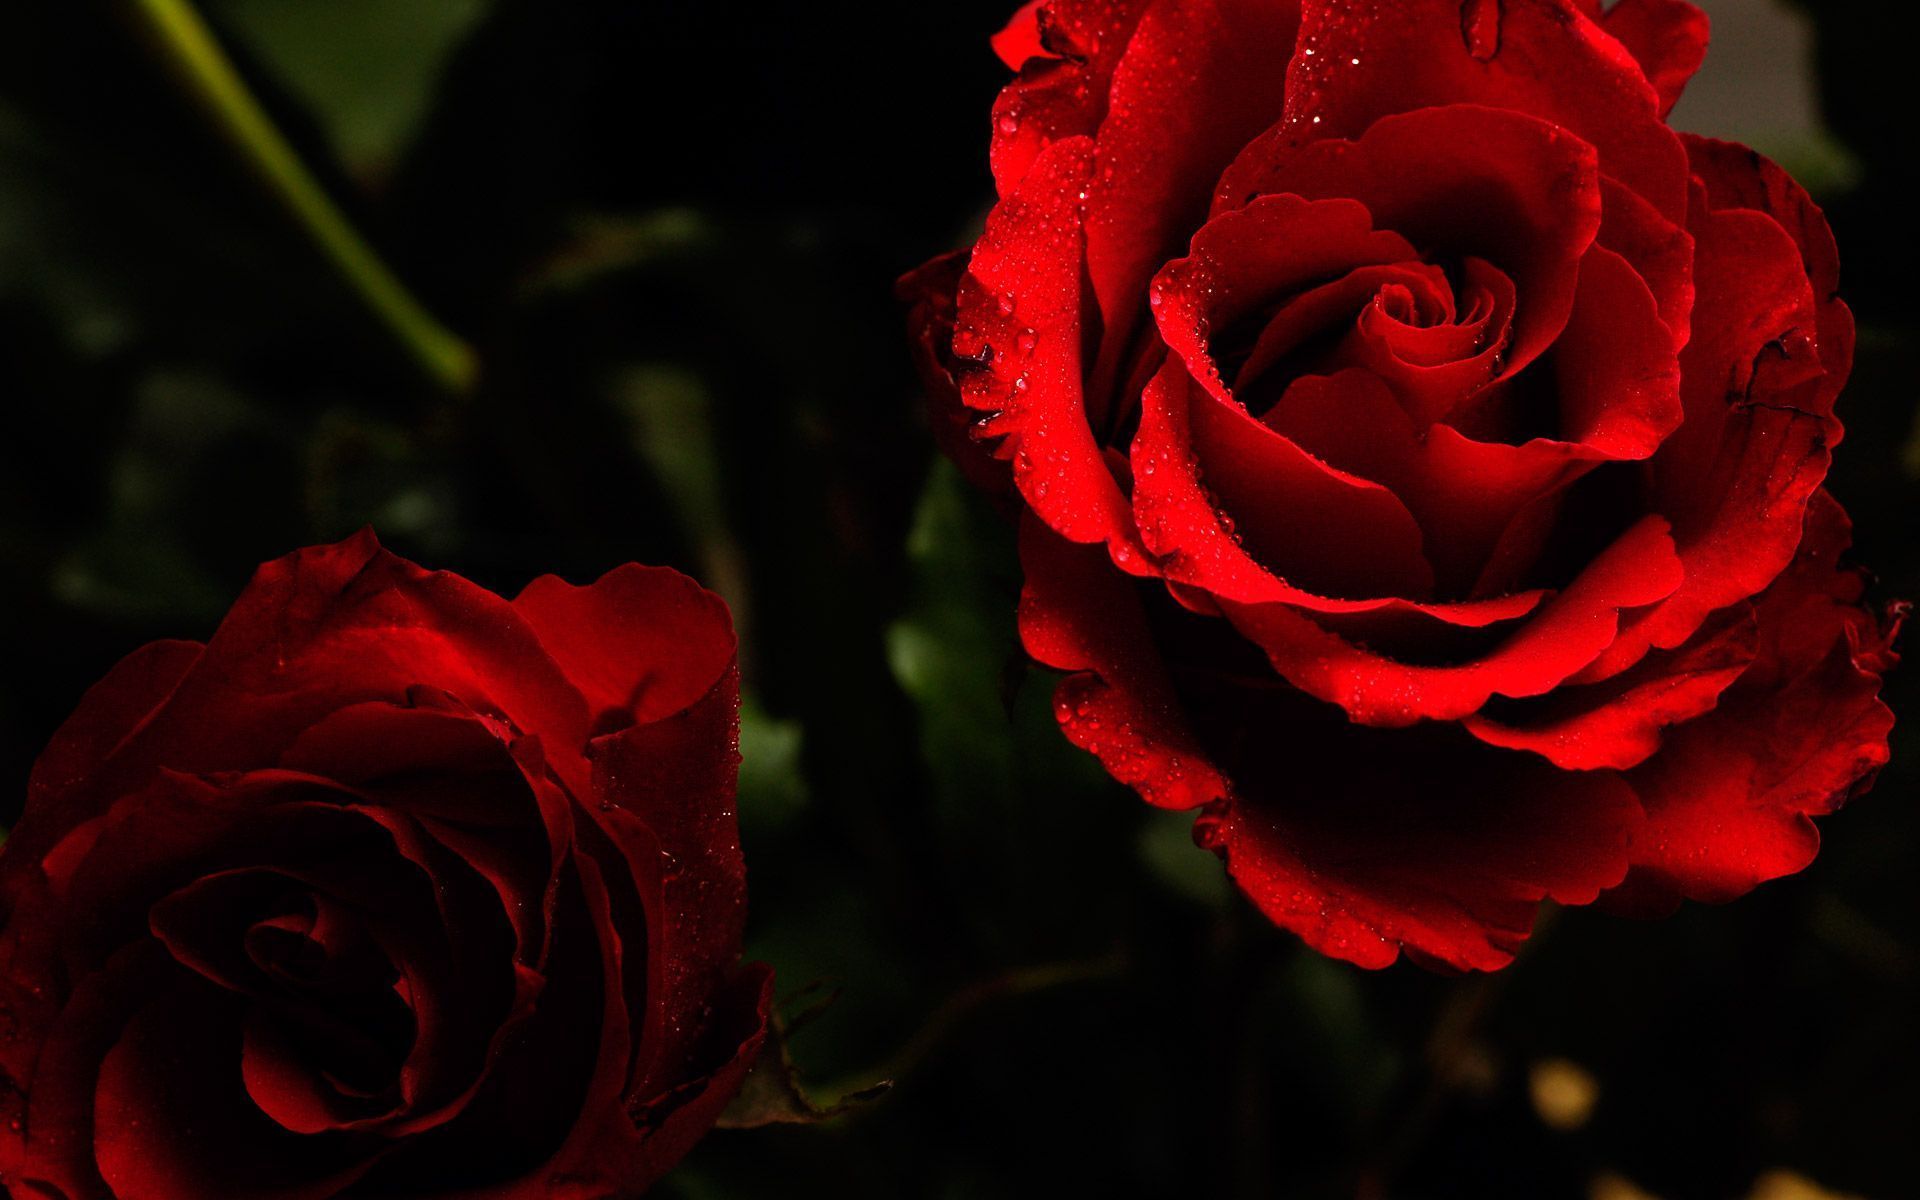 Roses Desktop Wallpaper. Roses Image Free Download. New Wallpaper. Red roses wallpaper, Beautiful red roses, Red flower wallpaper